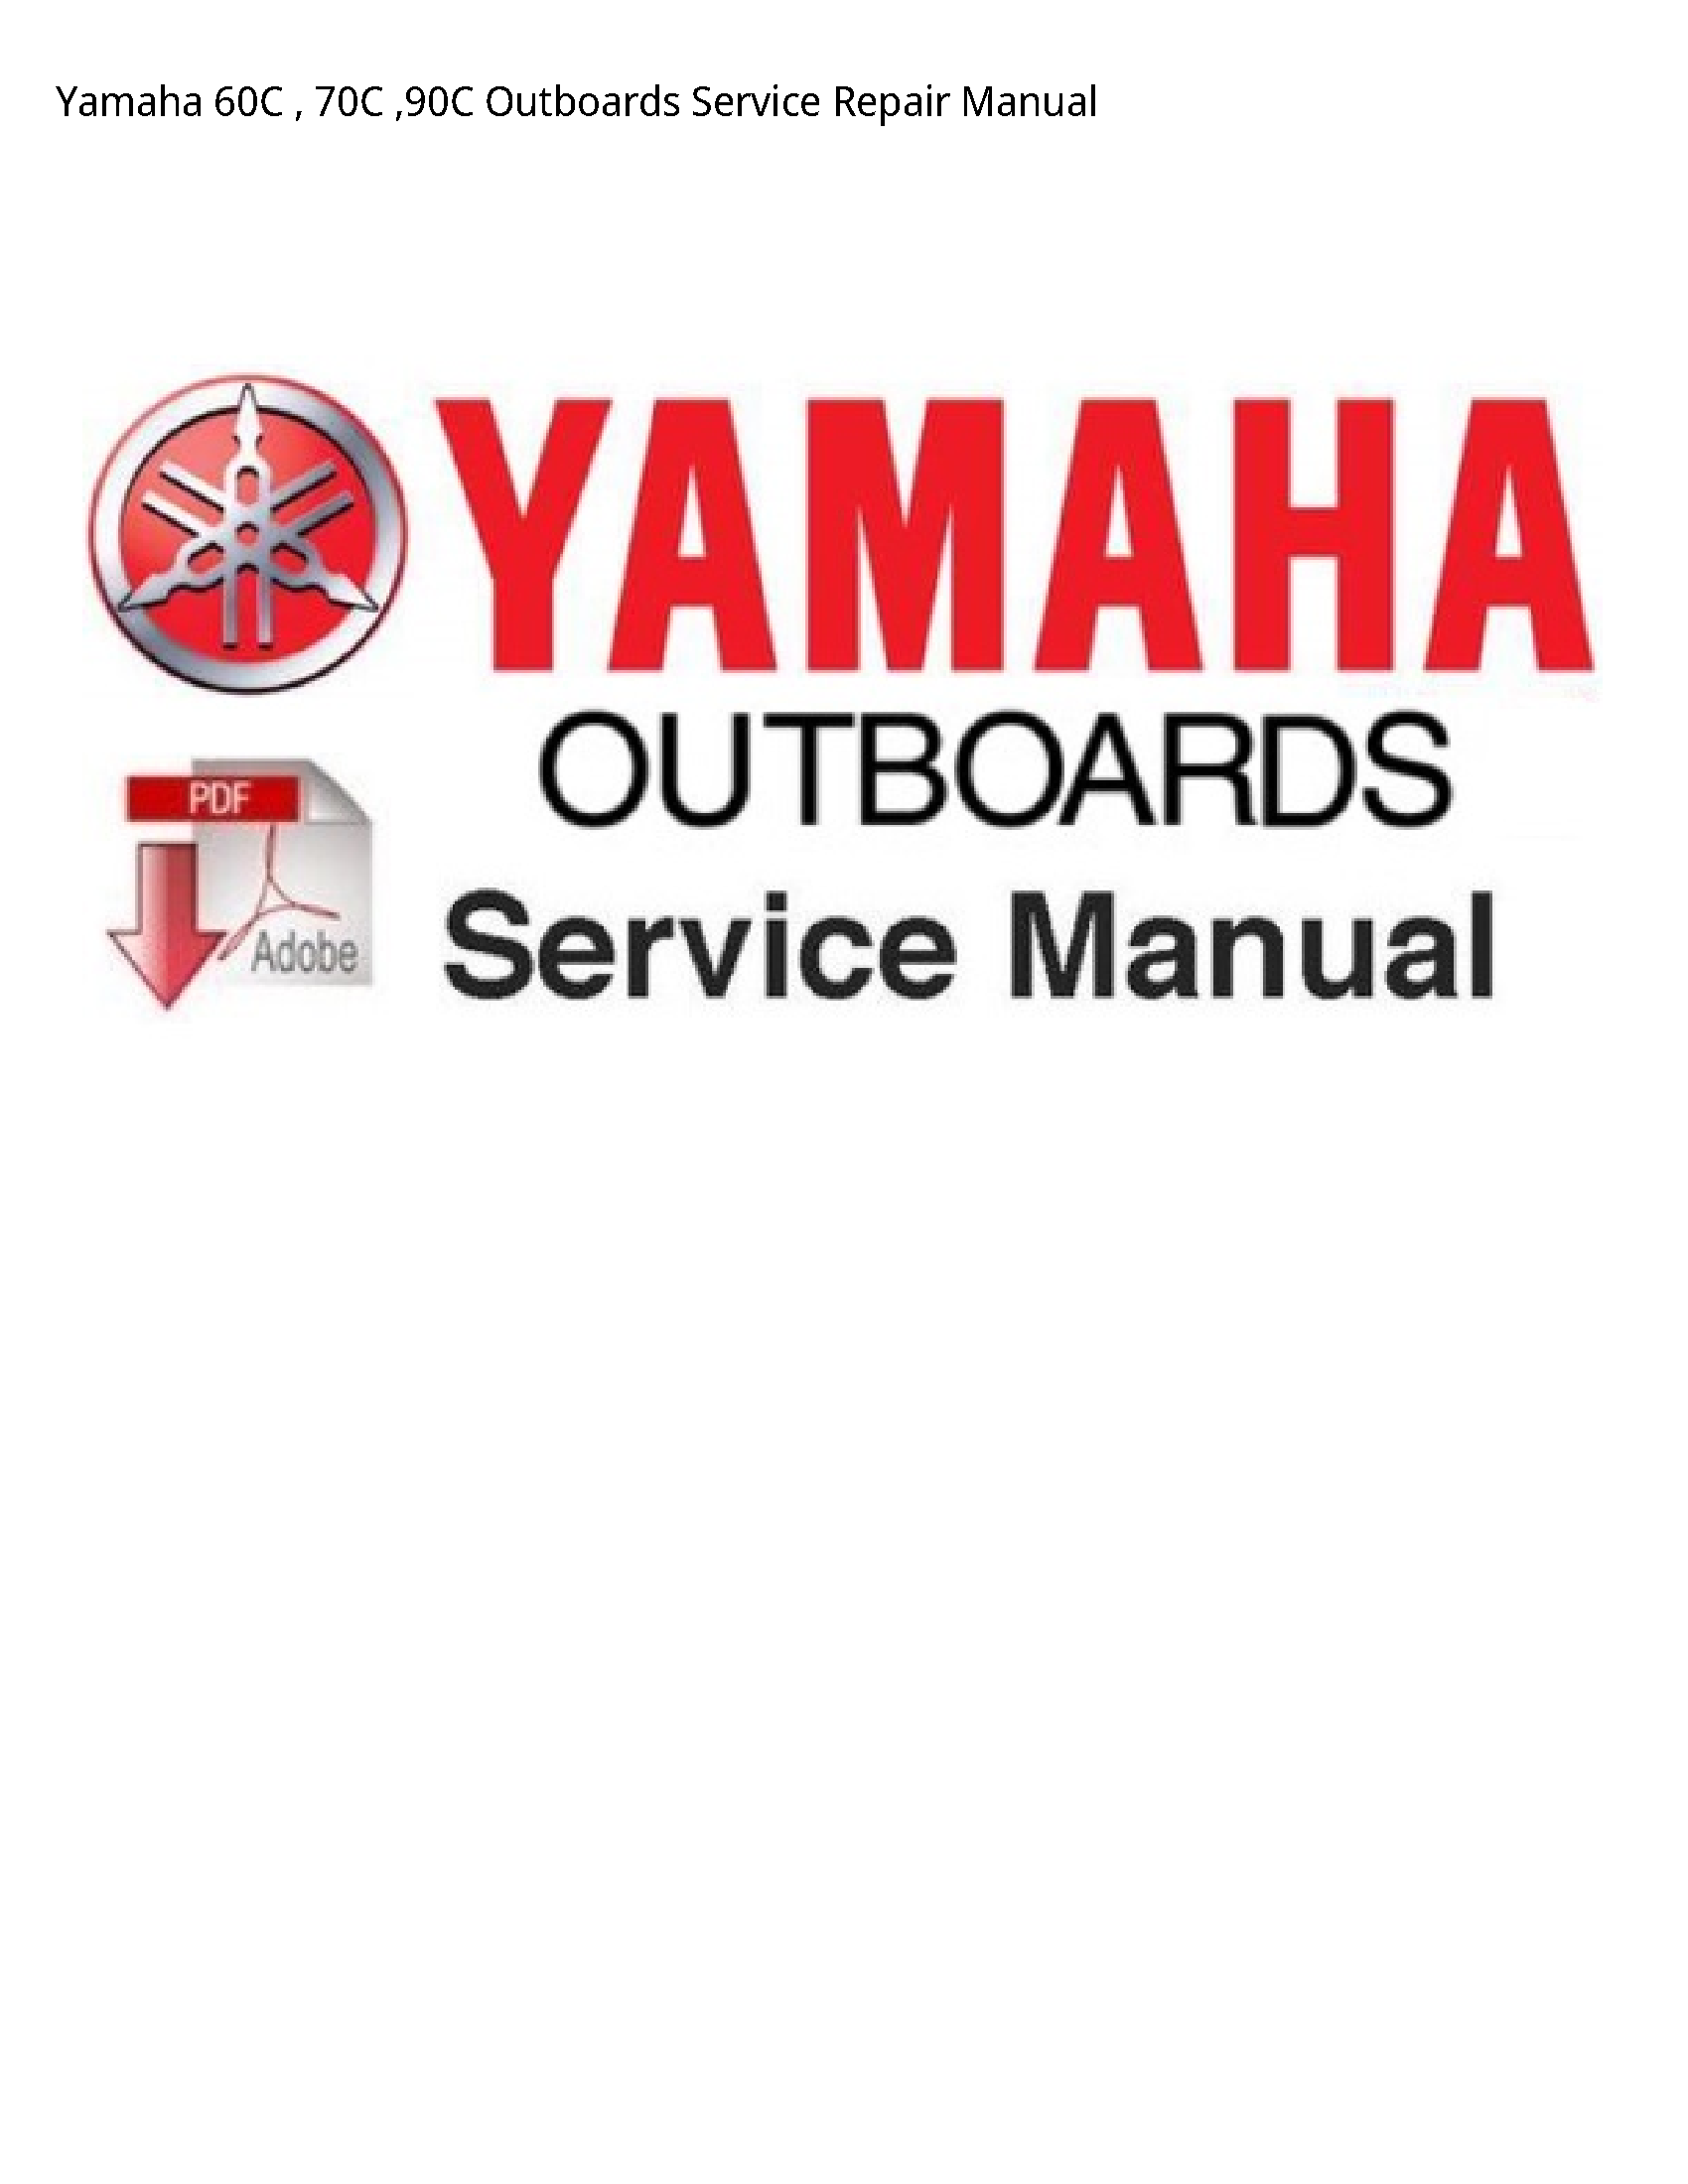 Yamaha 60C Outboards manual